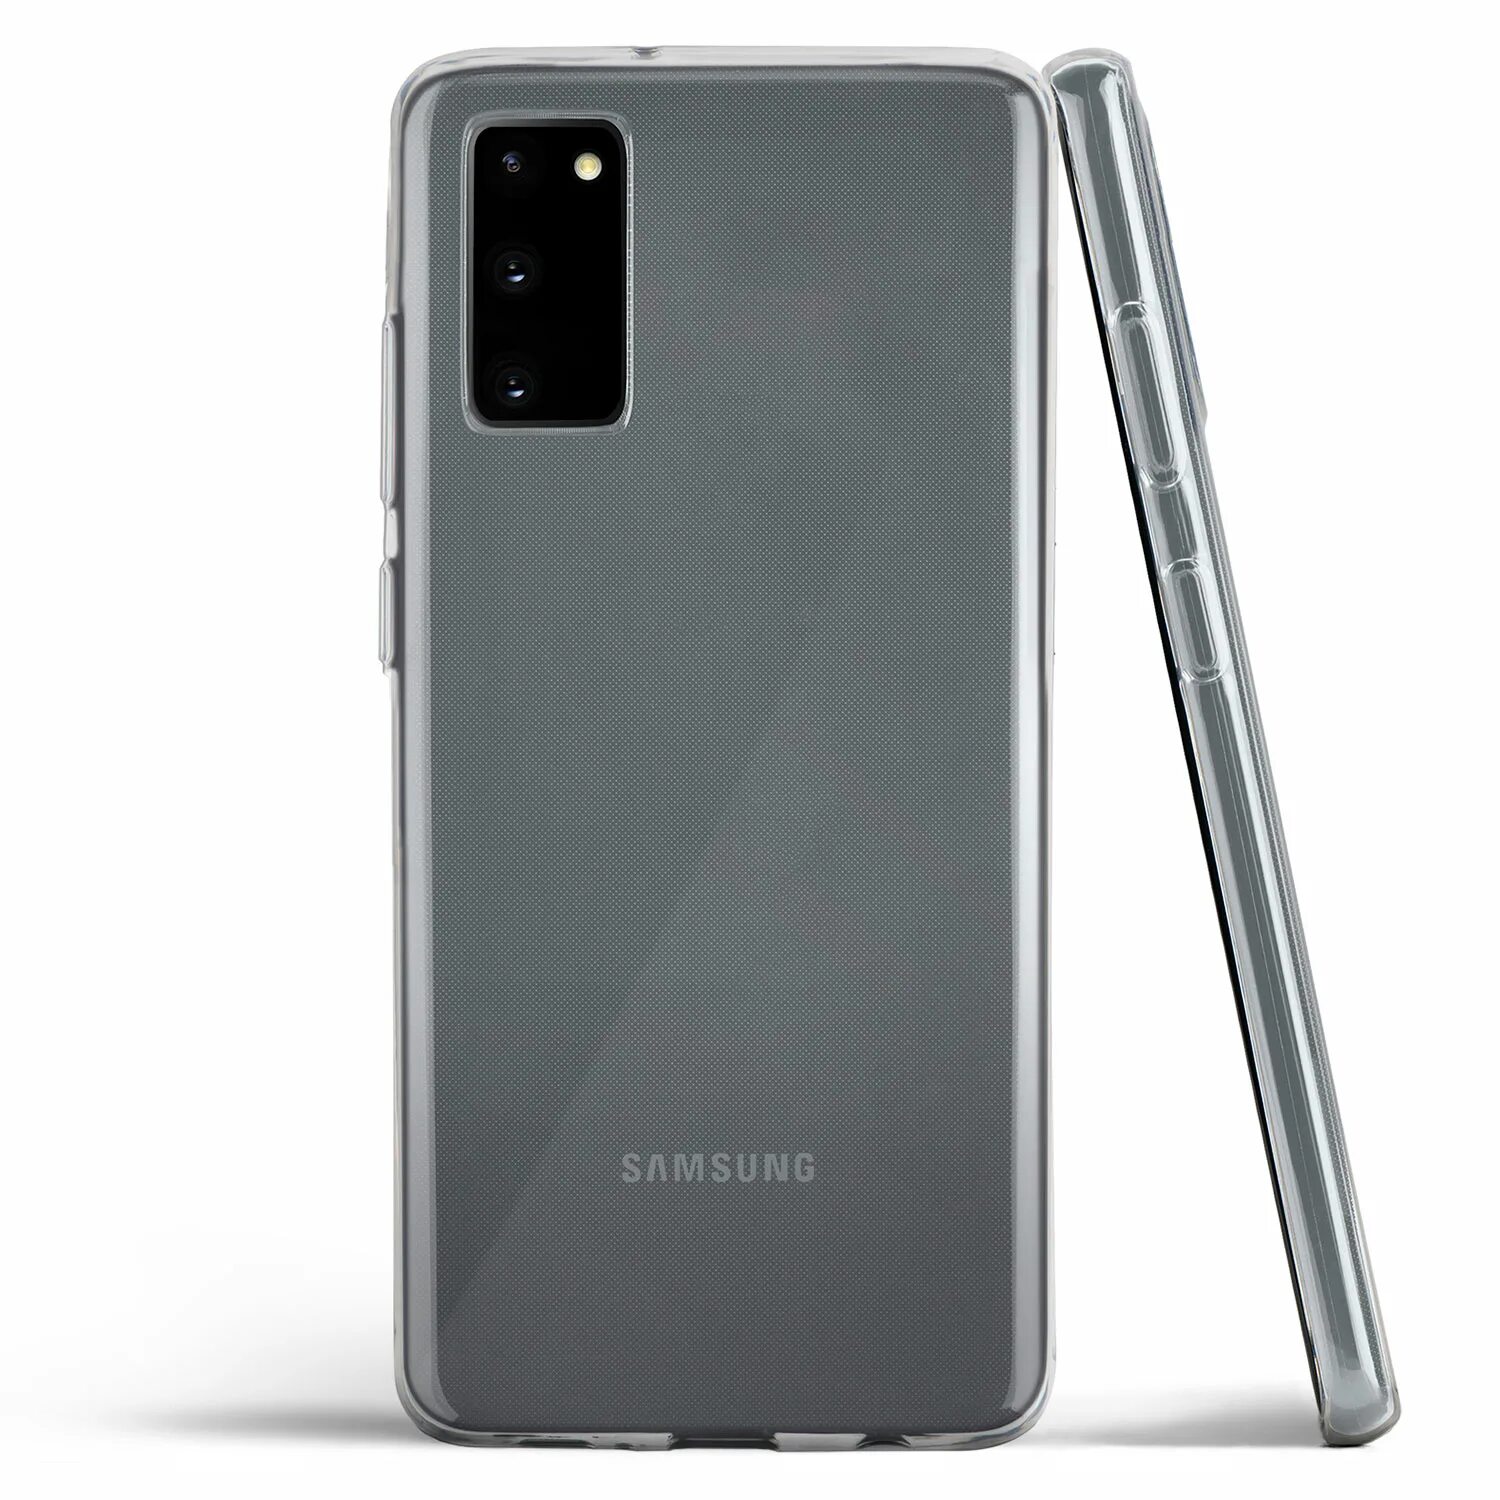 Самсунг галакси s20. Samsung Galaxy s20 серый. Samsung Galaxy s20 Samsung. Samsung Galaxy s20 Plus. Самсунг s20 отзывы